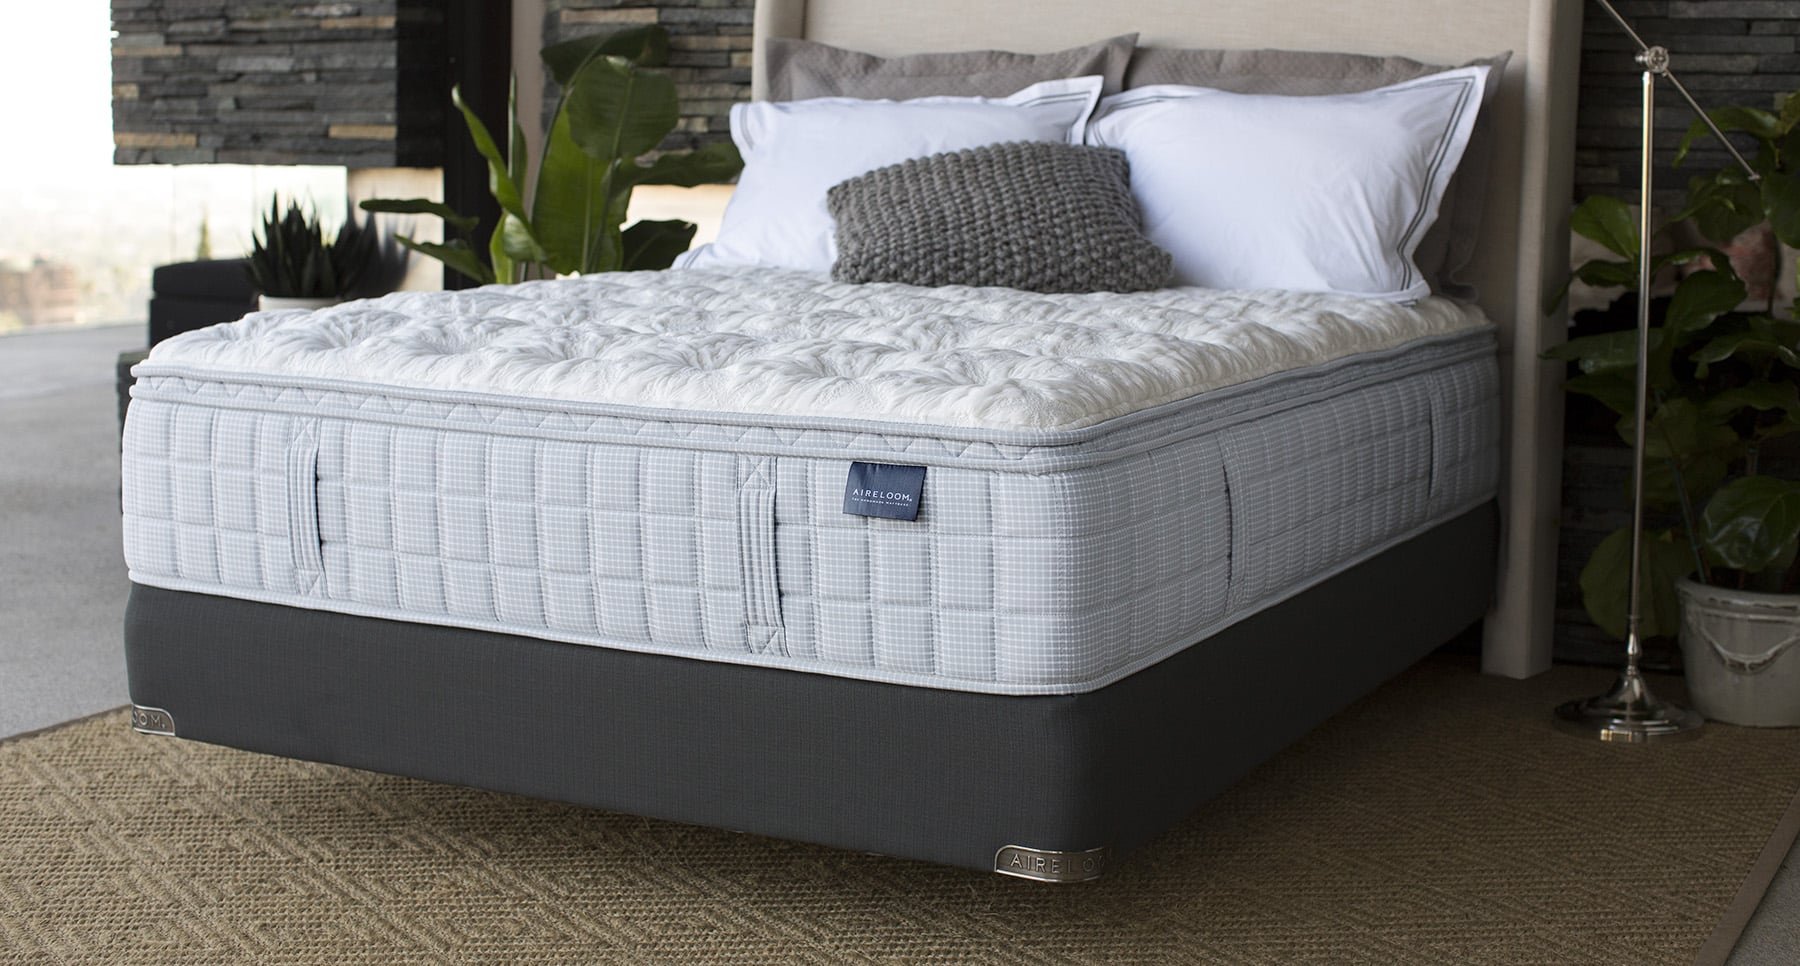 aireloom luxury plush mattress